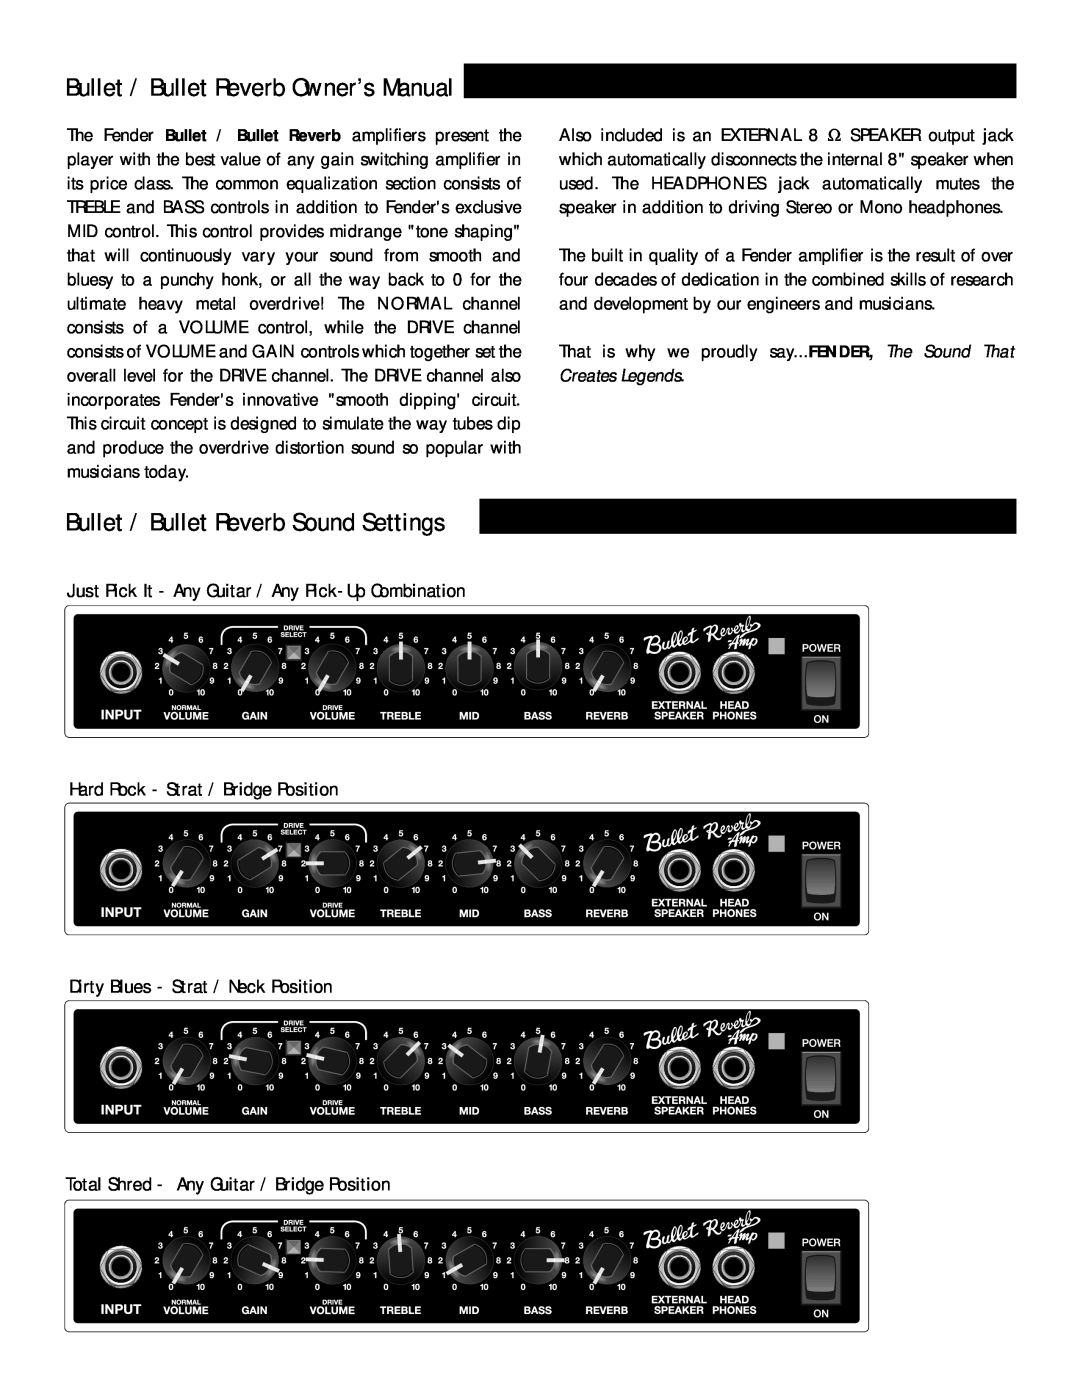 Fender PR 241 owner manual Hard Rock - Strat / Bridge Position, Dirty Blues - Strat / Neck Position 